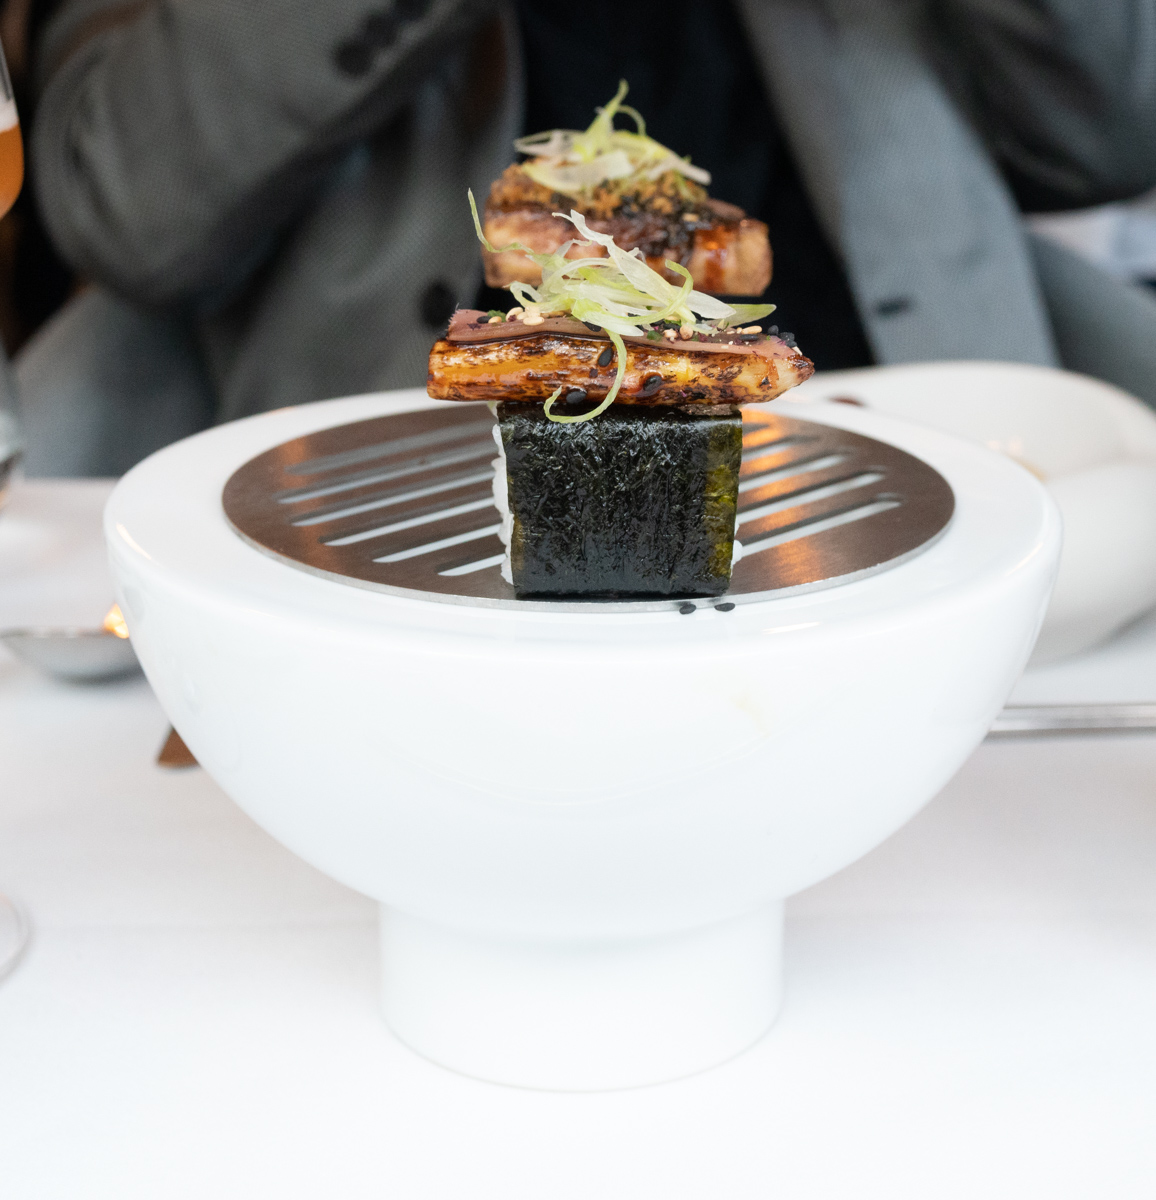 foie gras, crispy seaweed wrapped sushi rice
(Oya better)